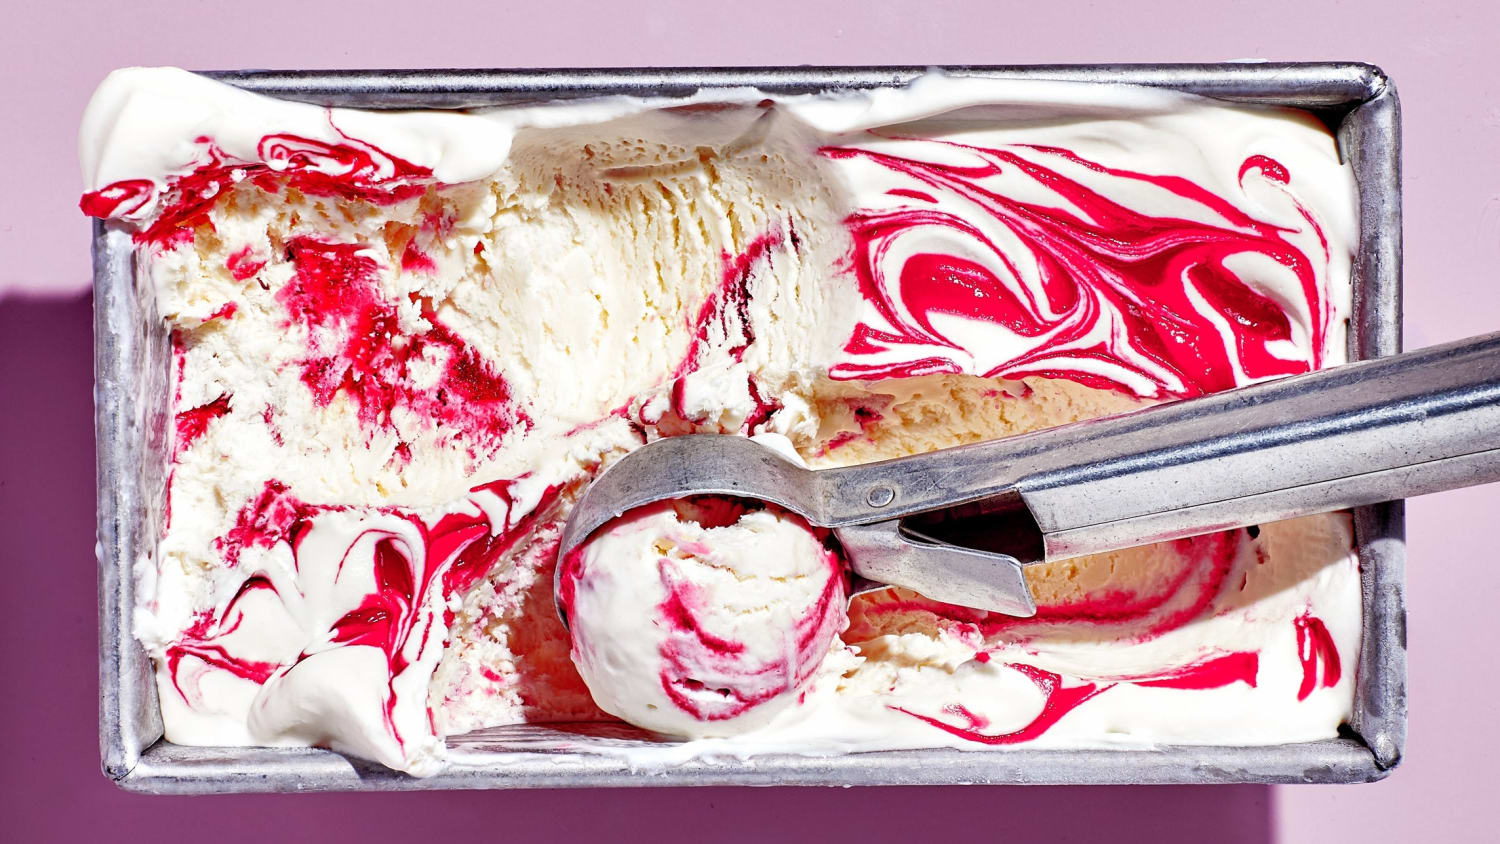 47 Absolutely Dreamy Ice Cream Recipes